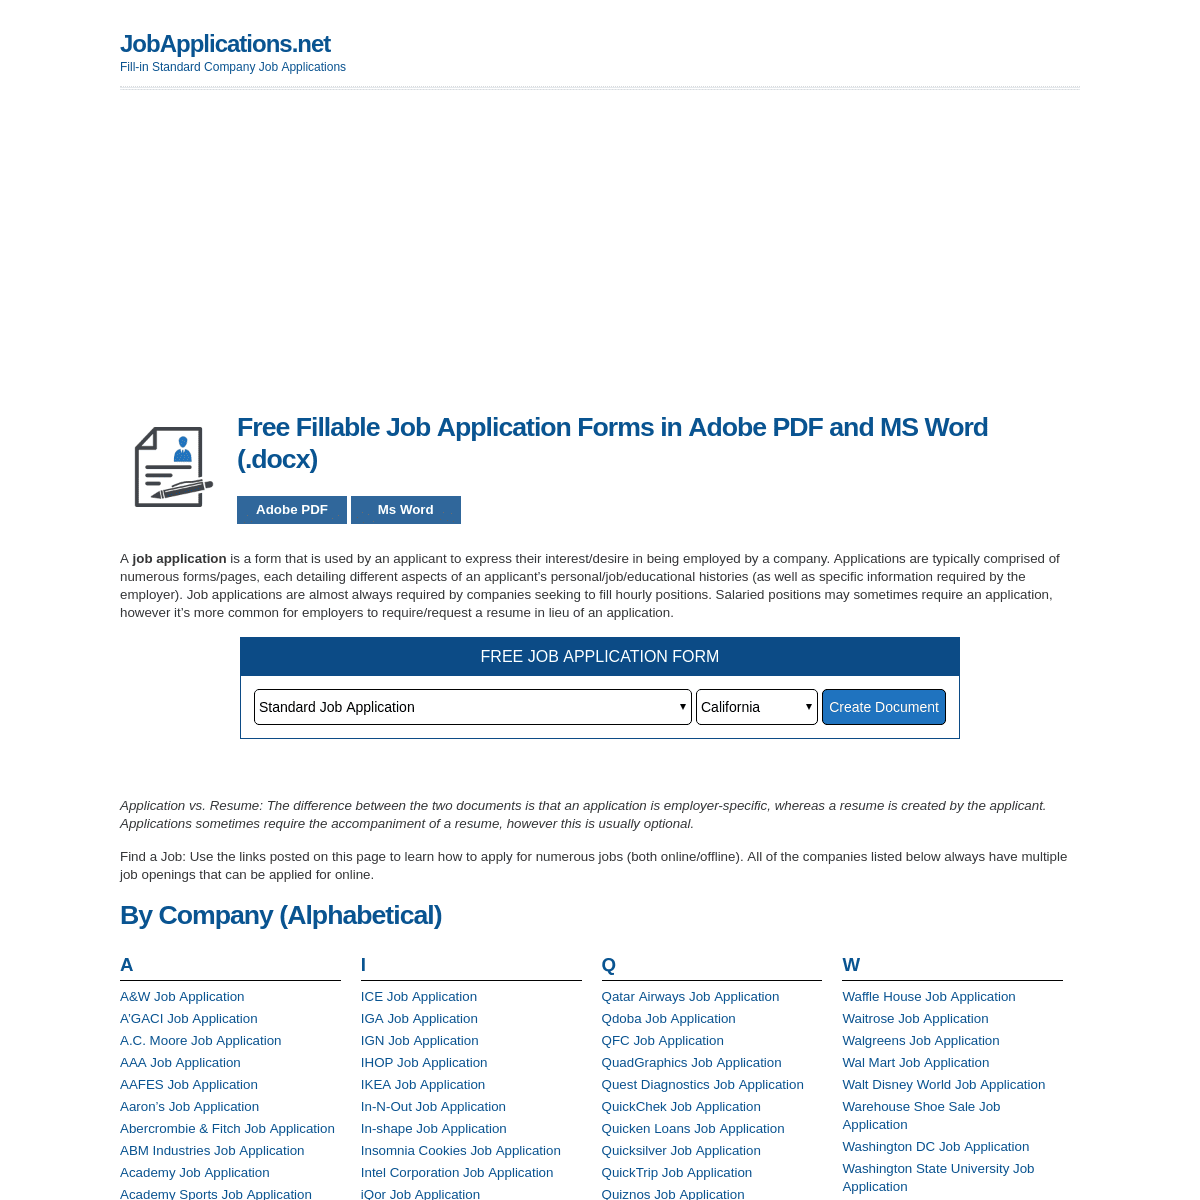 A complete backup of jobapplications.net